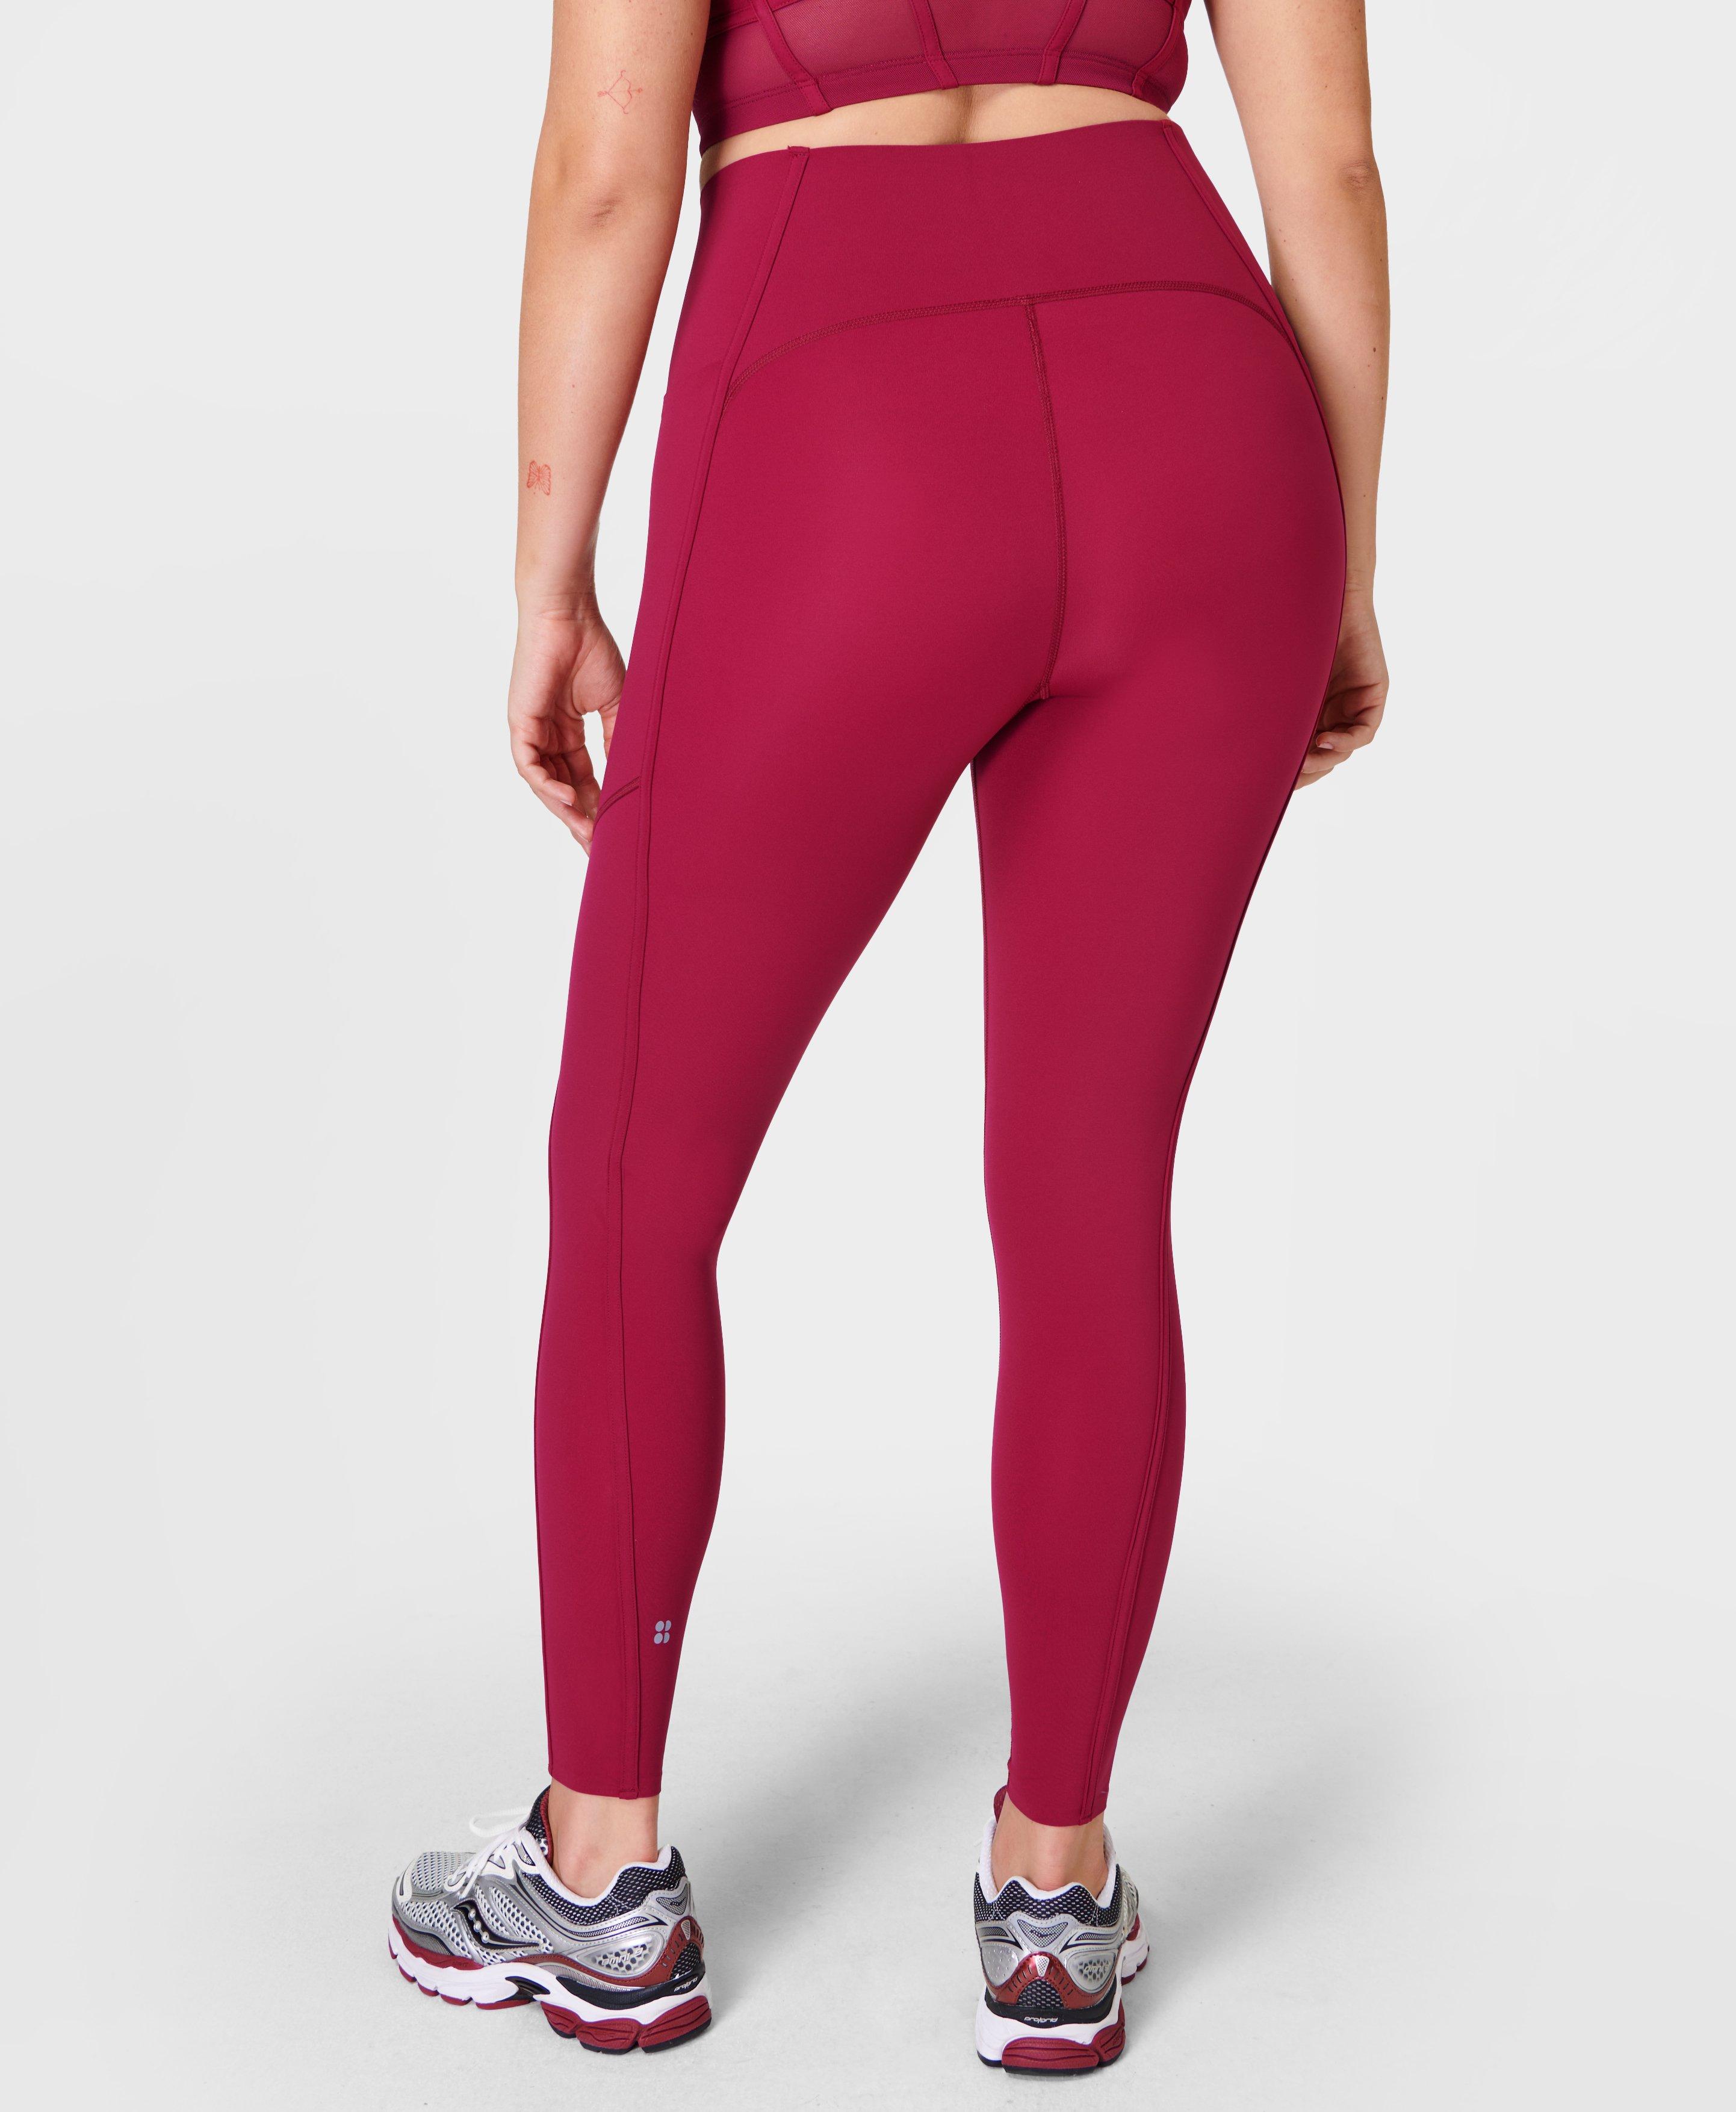 Lululemon Align 25” Leggings Pink Size 4 - $62 (38% Off Retail